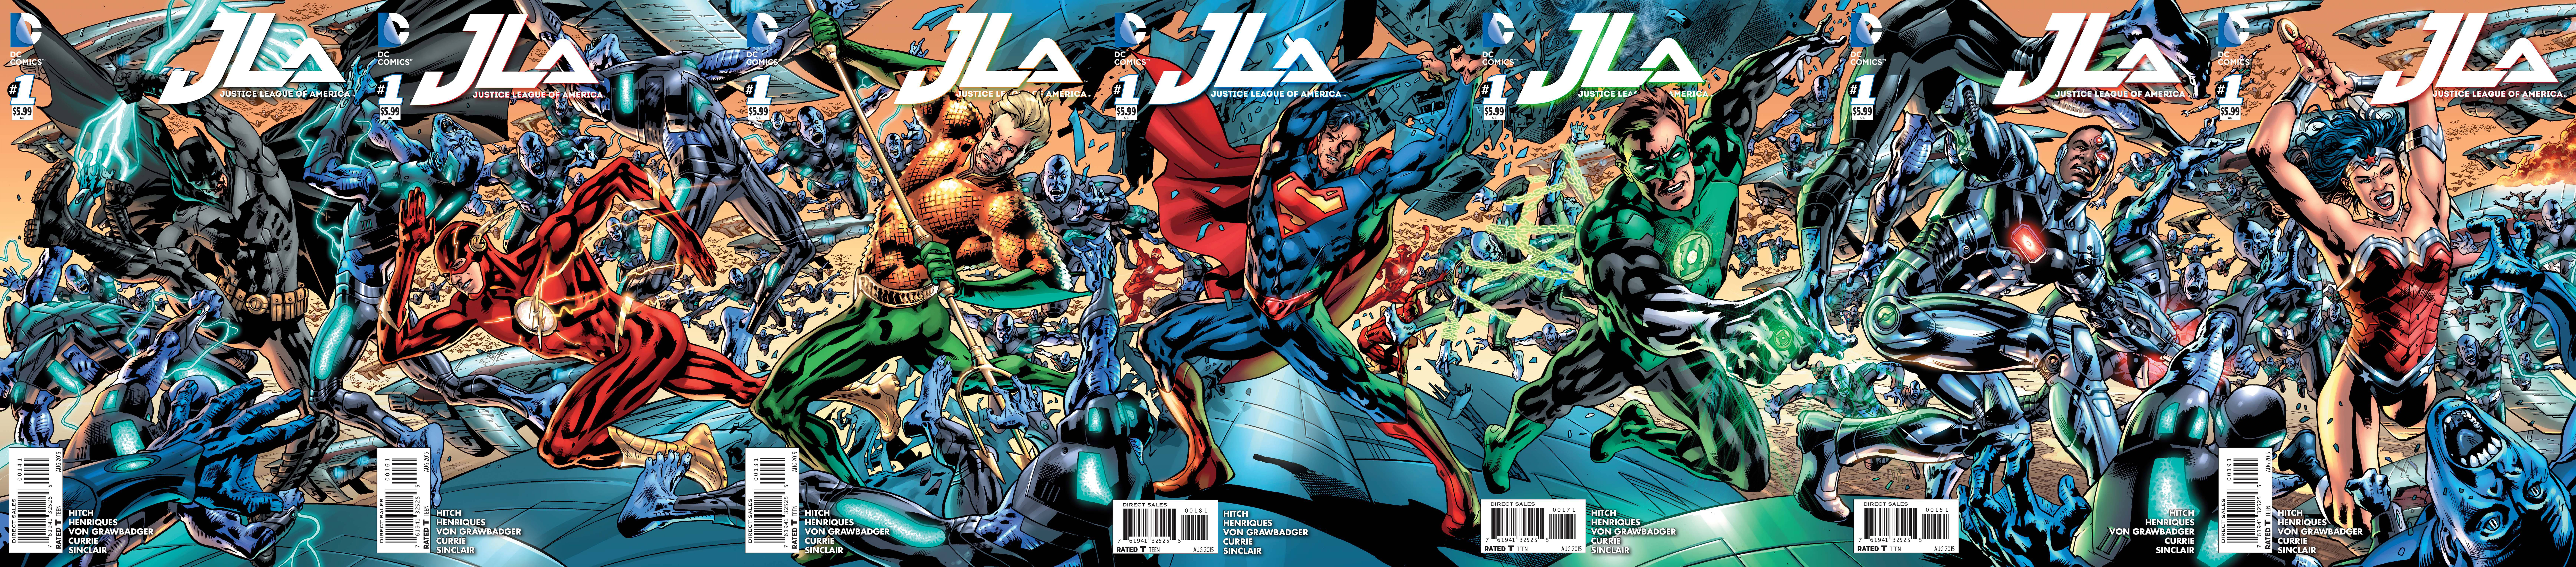 Comics Justice League Of America 13890x3056